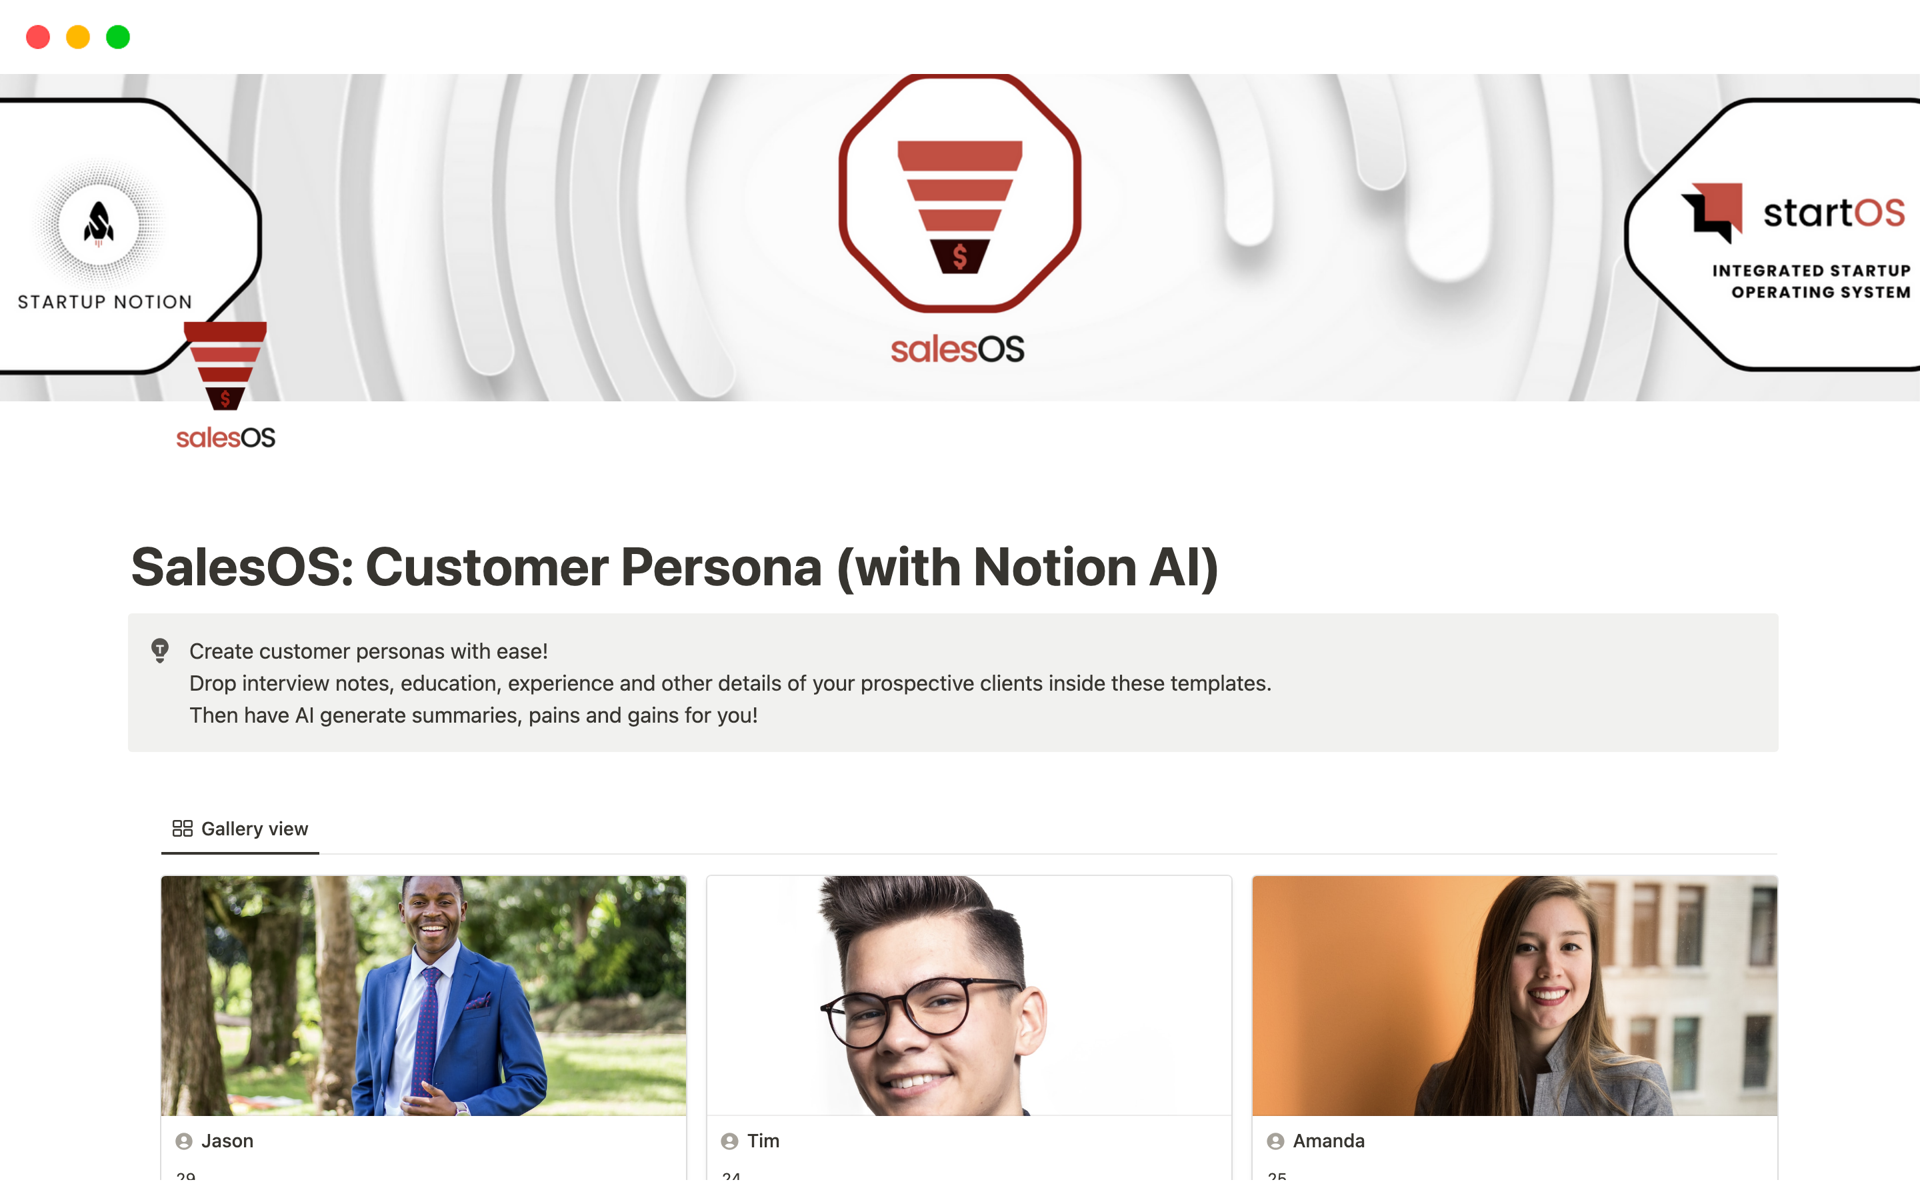 salesos-customer-persona-with-notion-ai-ajinkya-bhat-startup-notion-desktop